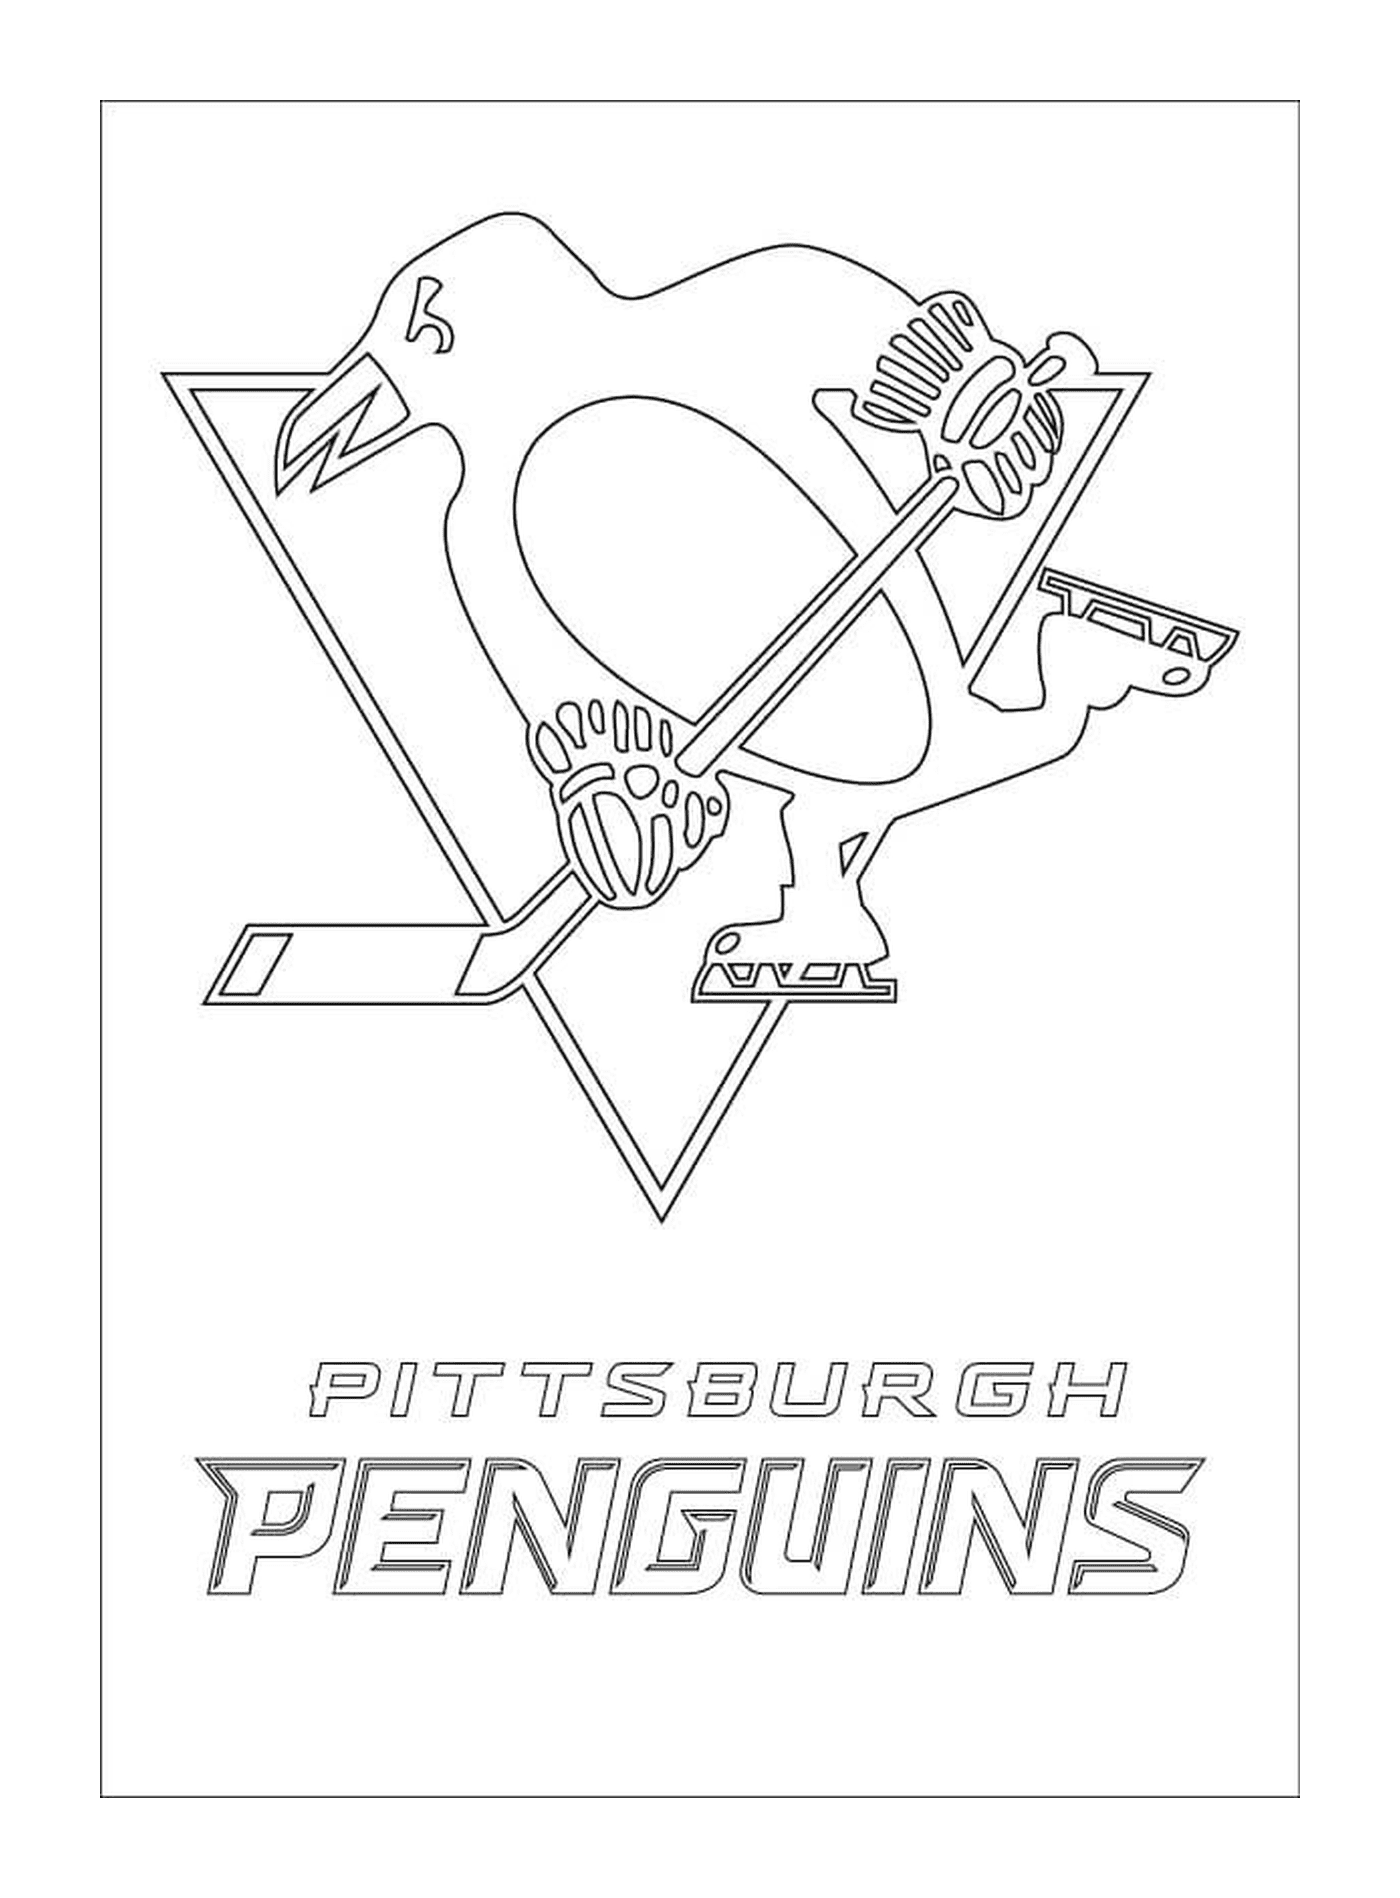  Logotipo do Pinguim de Pittsburgh 